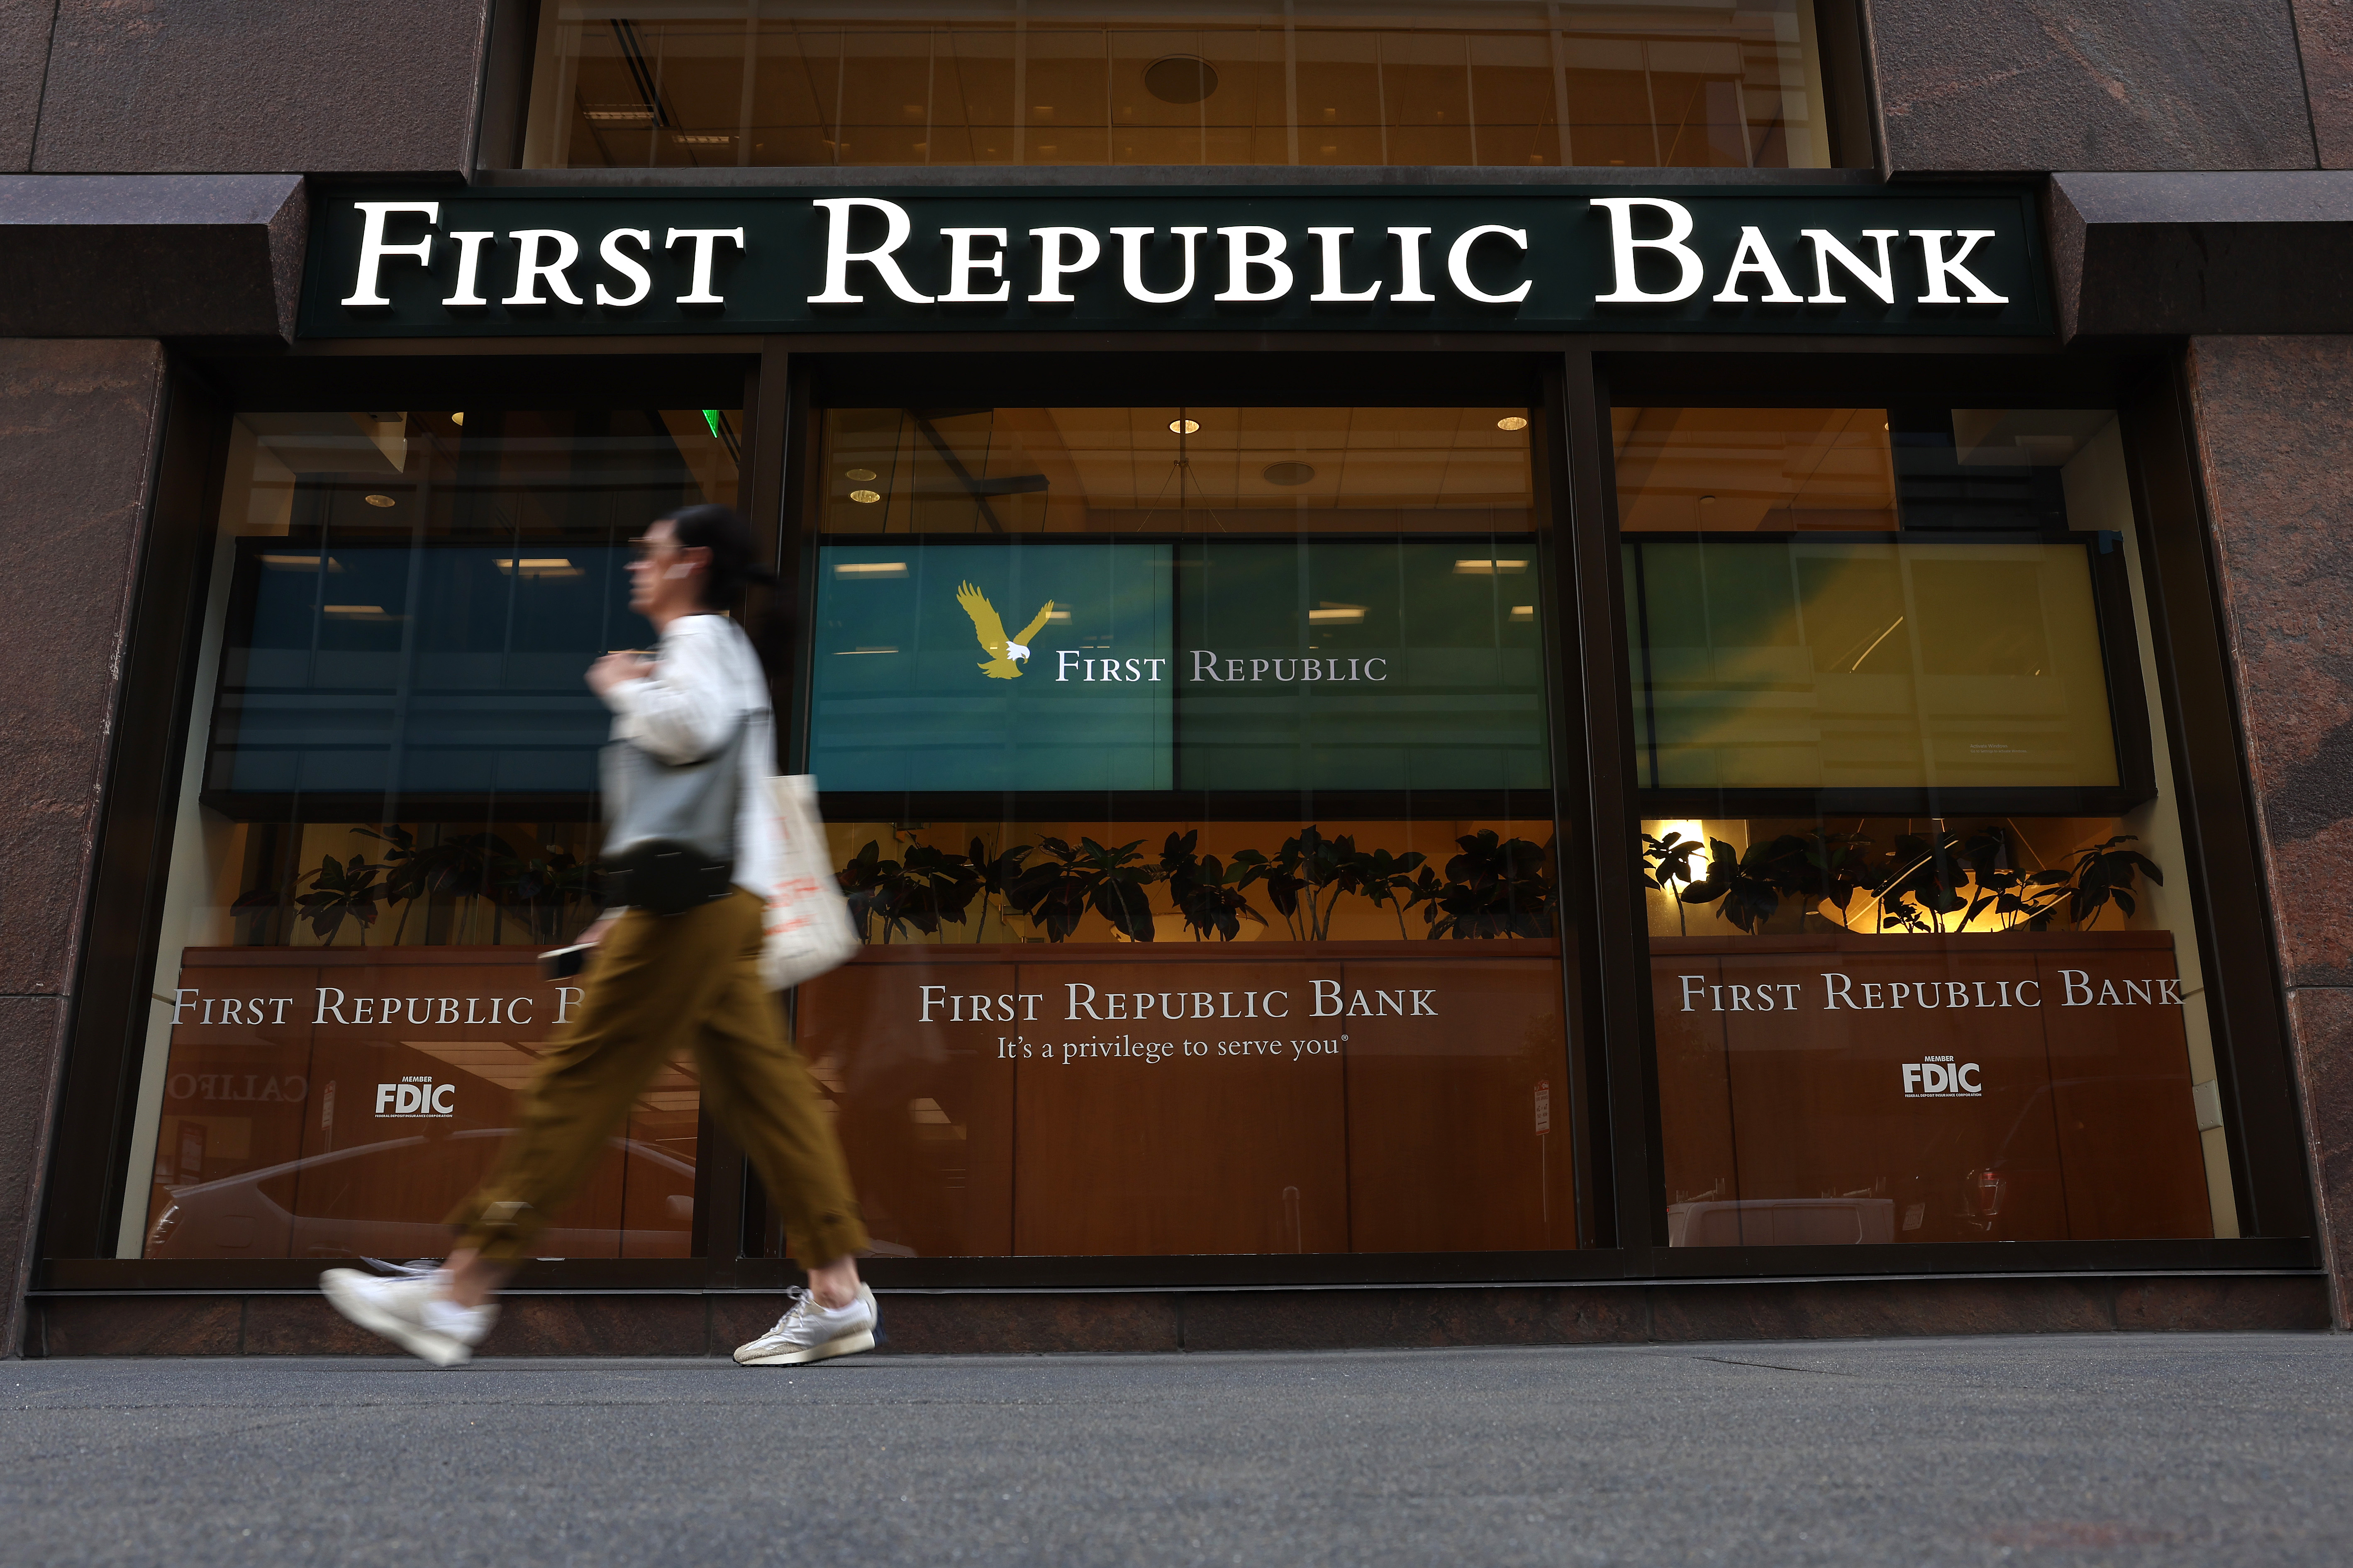 1 first bank. Американские банки. Первые банки в мире. Банк Америки. First Republic Bank.